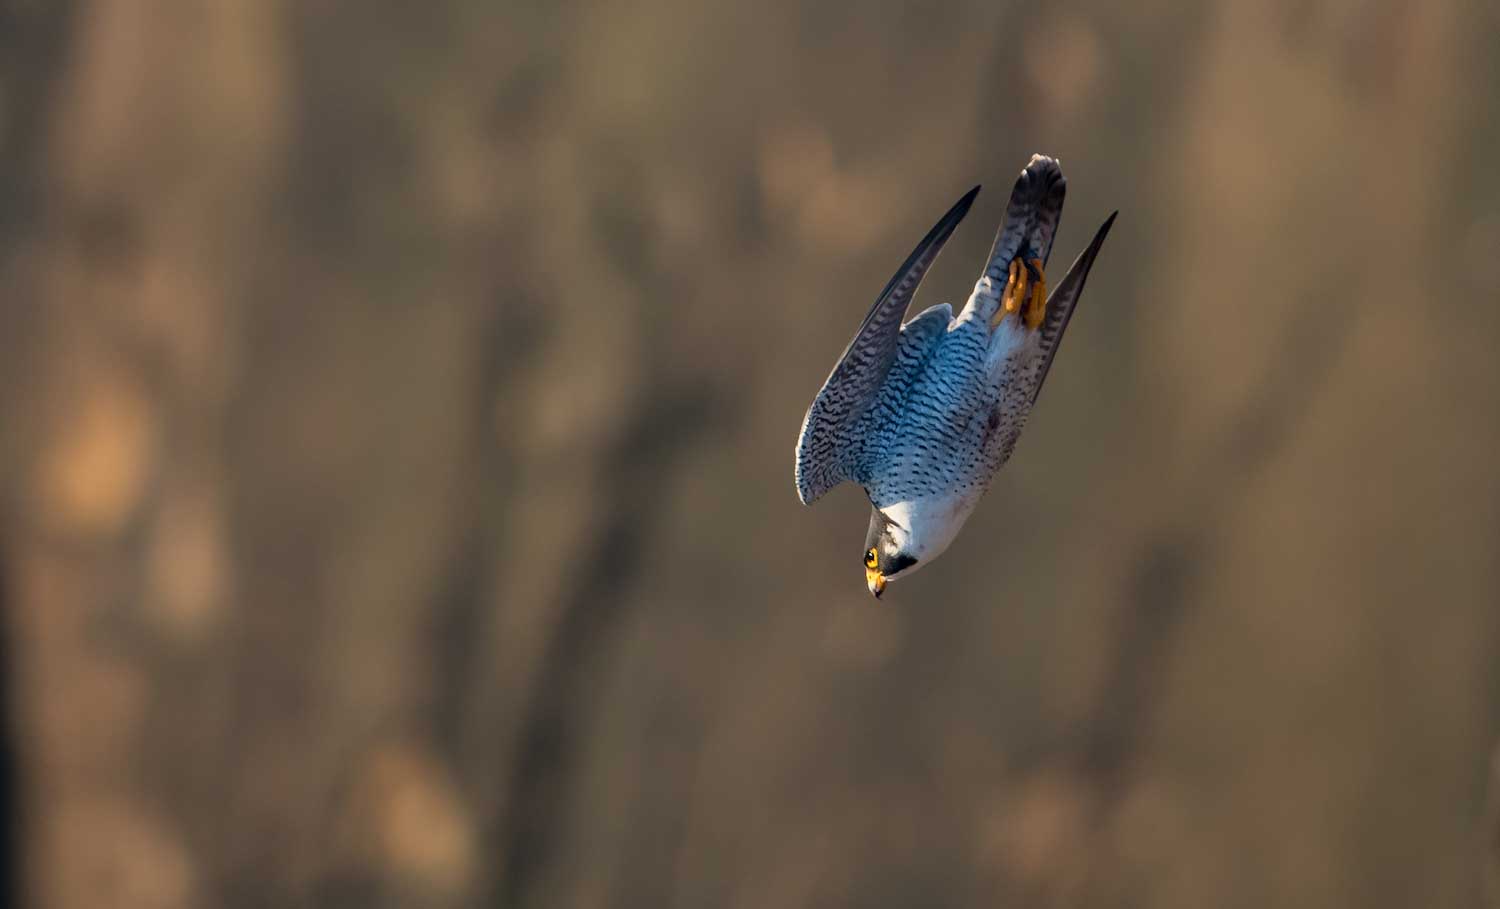 A peregrine falcon diving in flight.